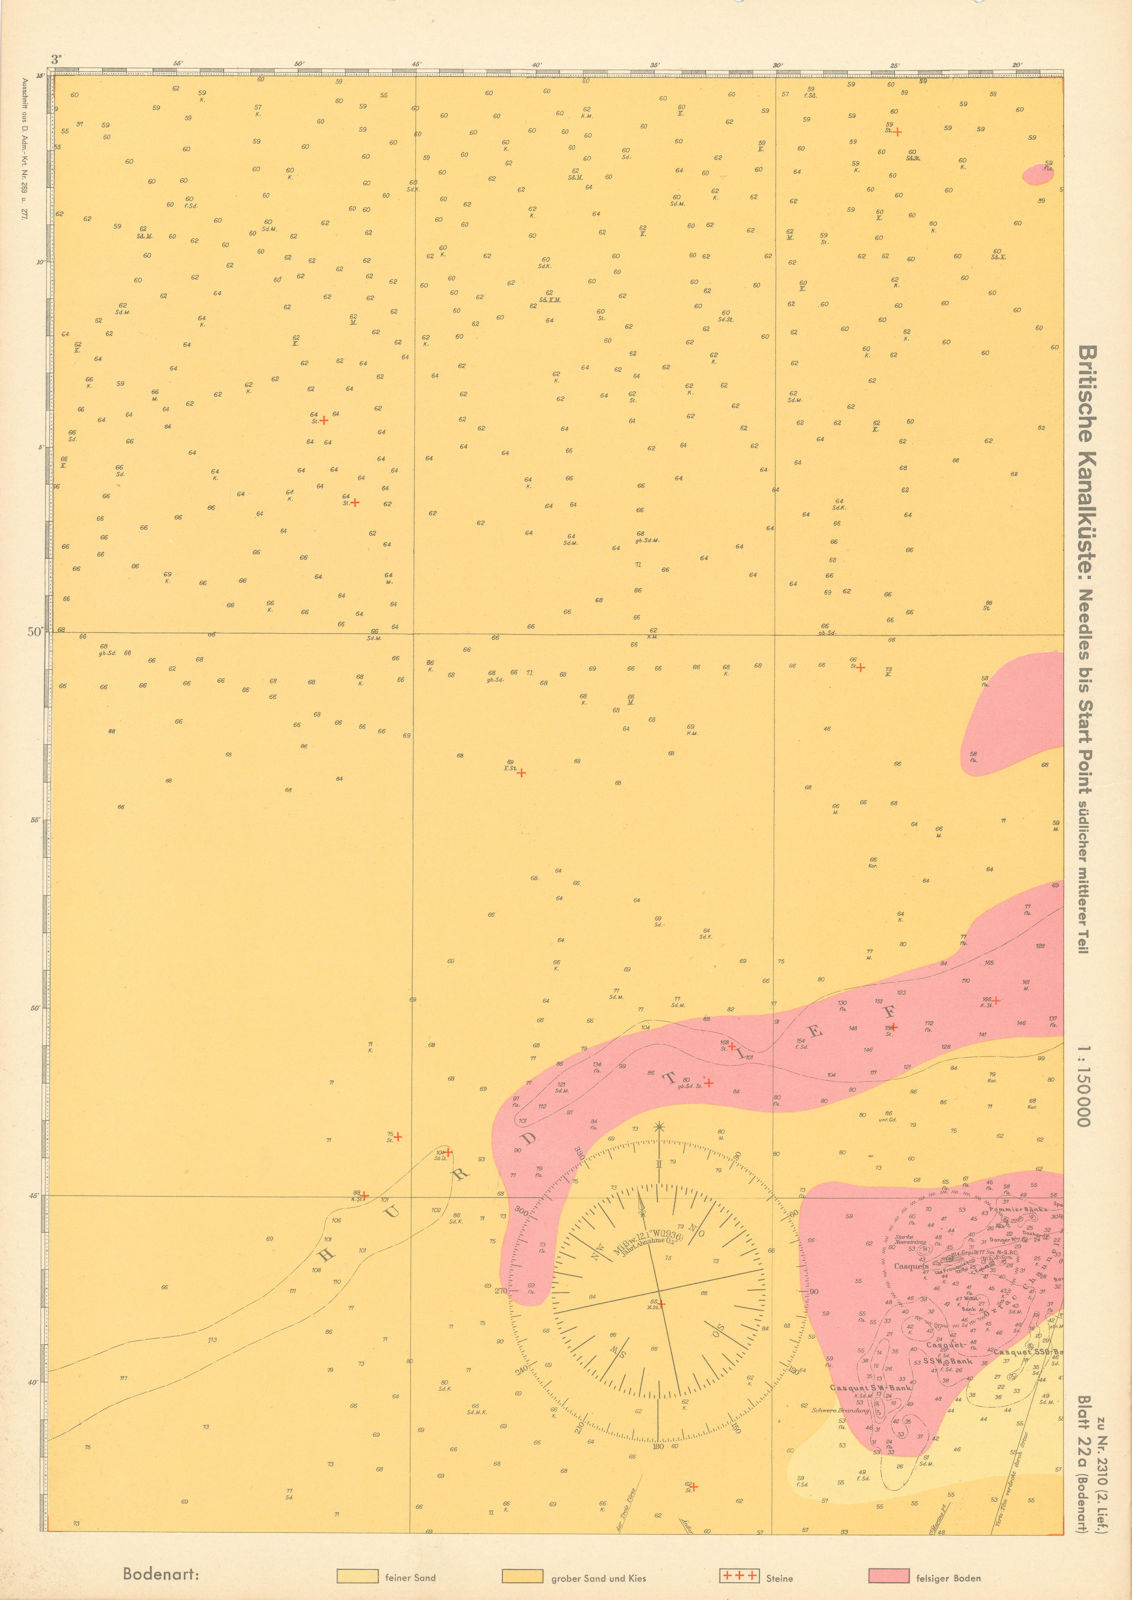 22a. English Channel. Casquet rocks west of Alderney. KRIEGSMARINE Nazi map 1940